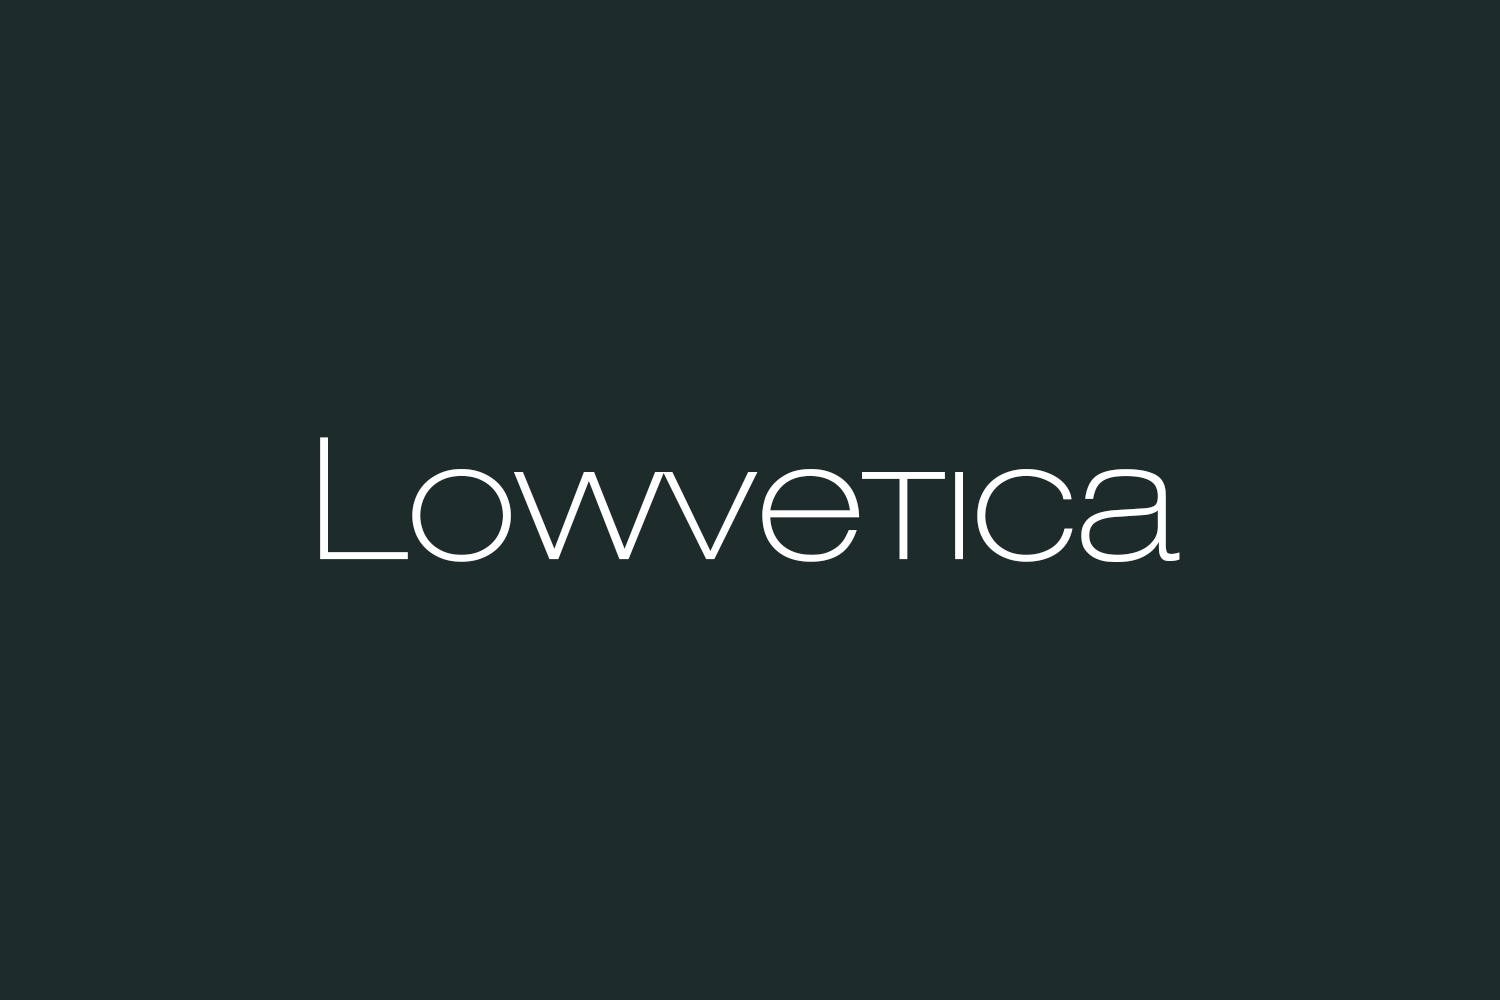 Lowvetica Free Font